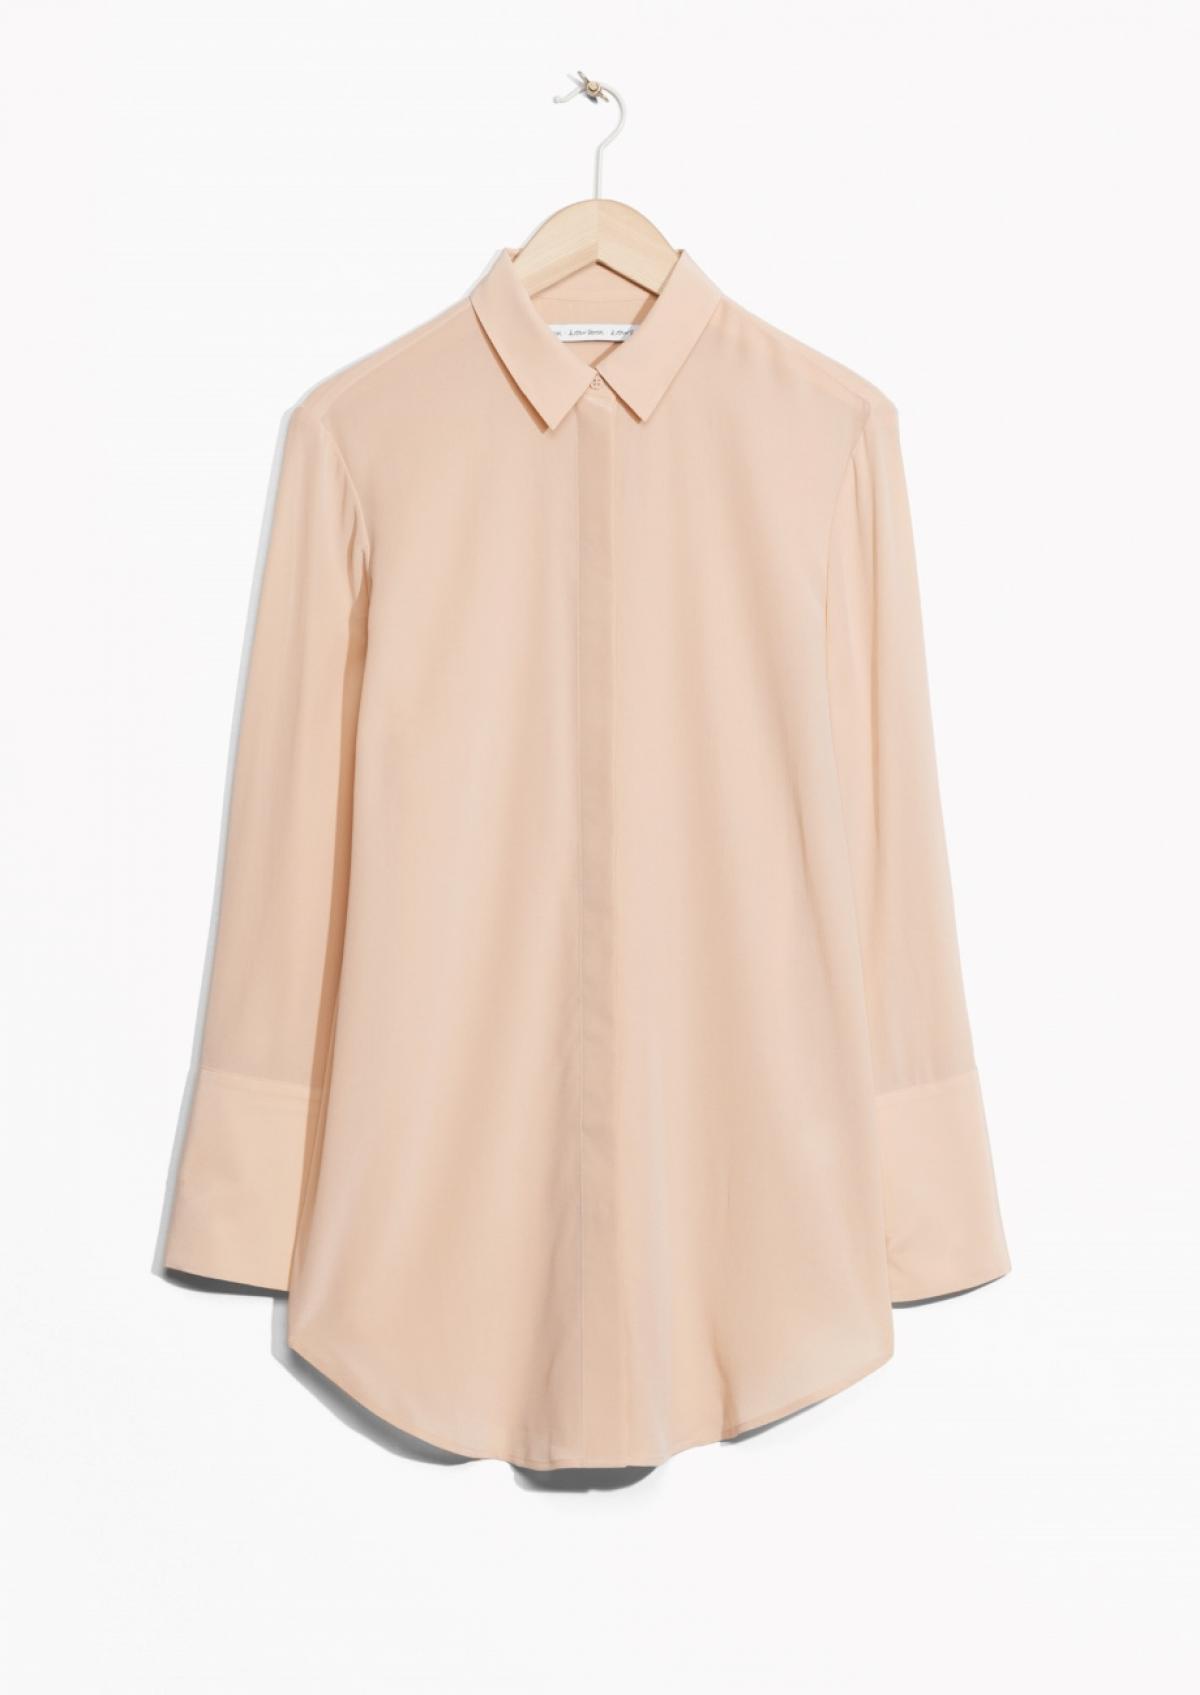 La blouse oversize & Other Stories